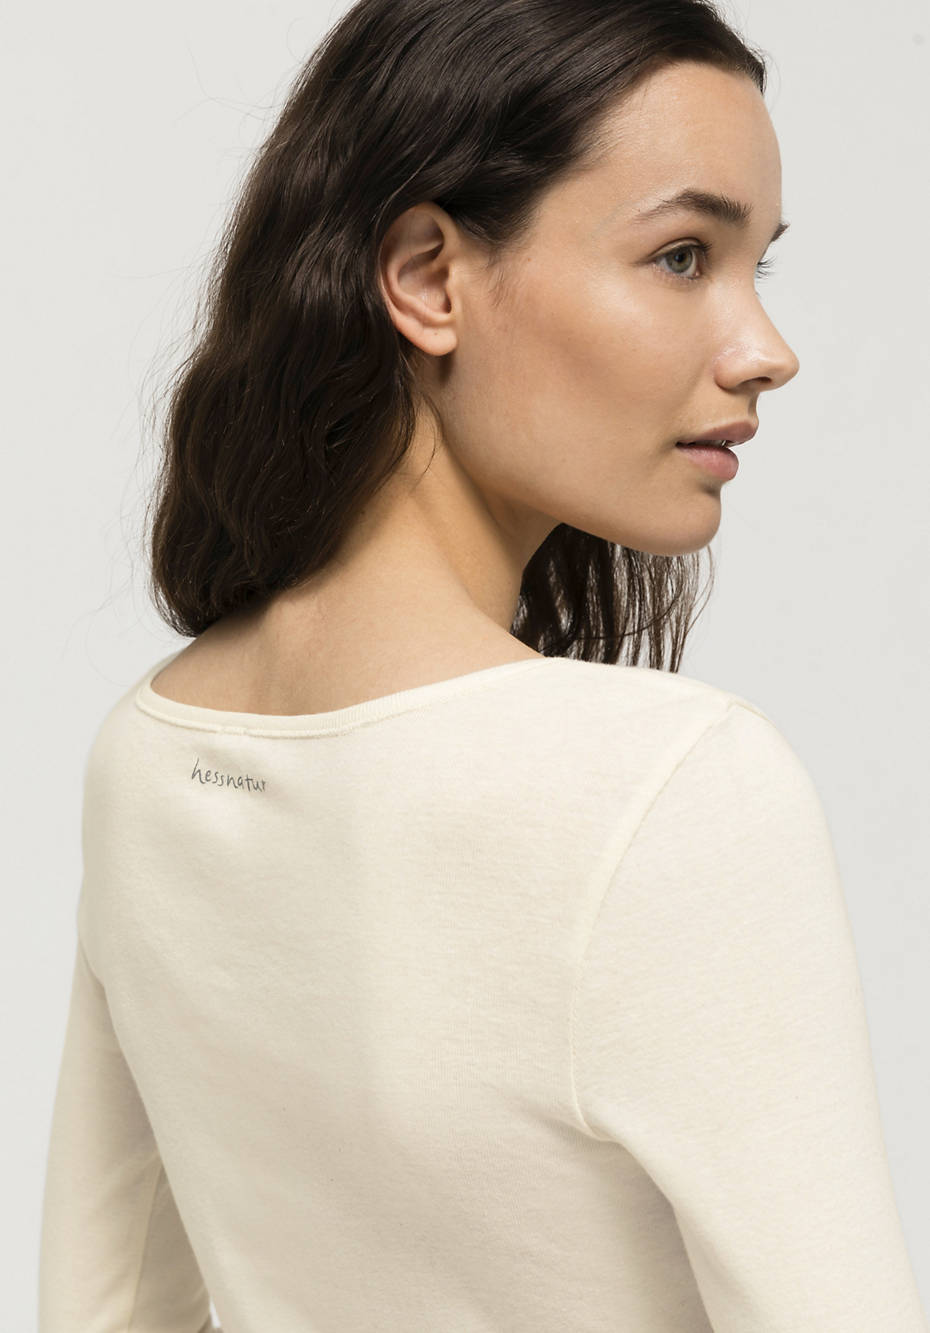 Long-sleeved shirt ModernNATURE made of pure organic cotton